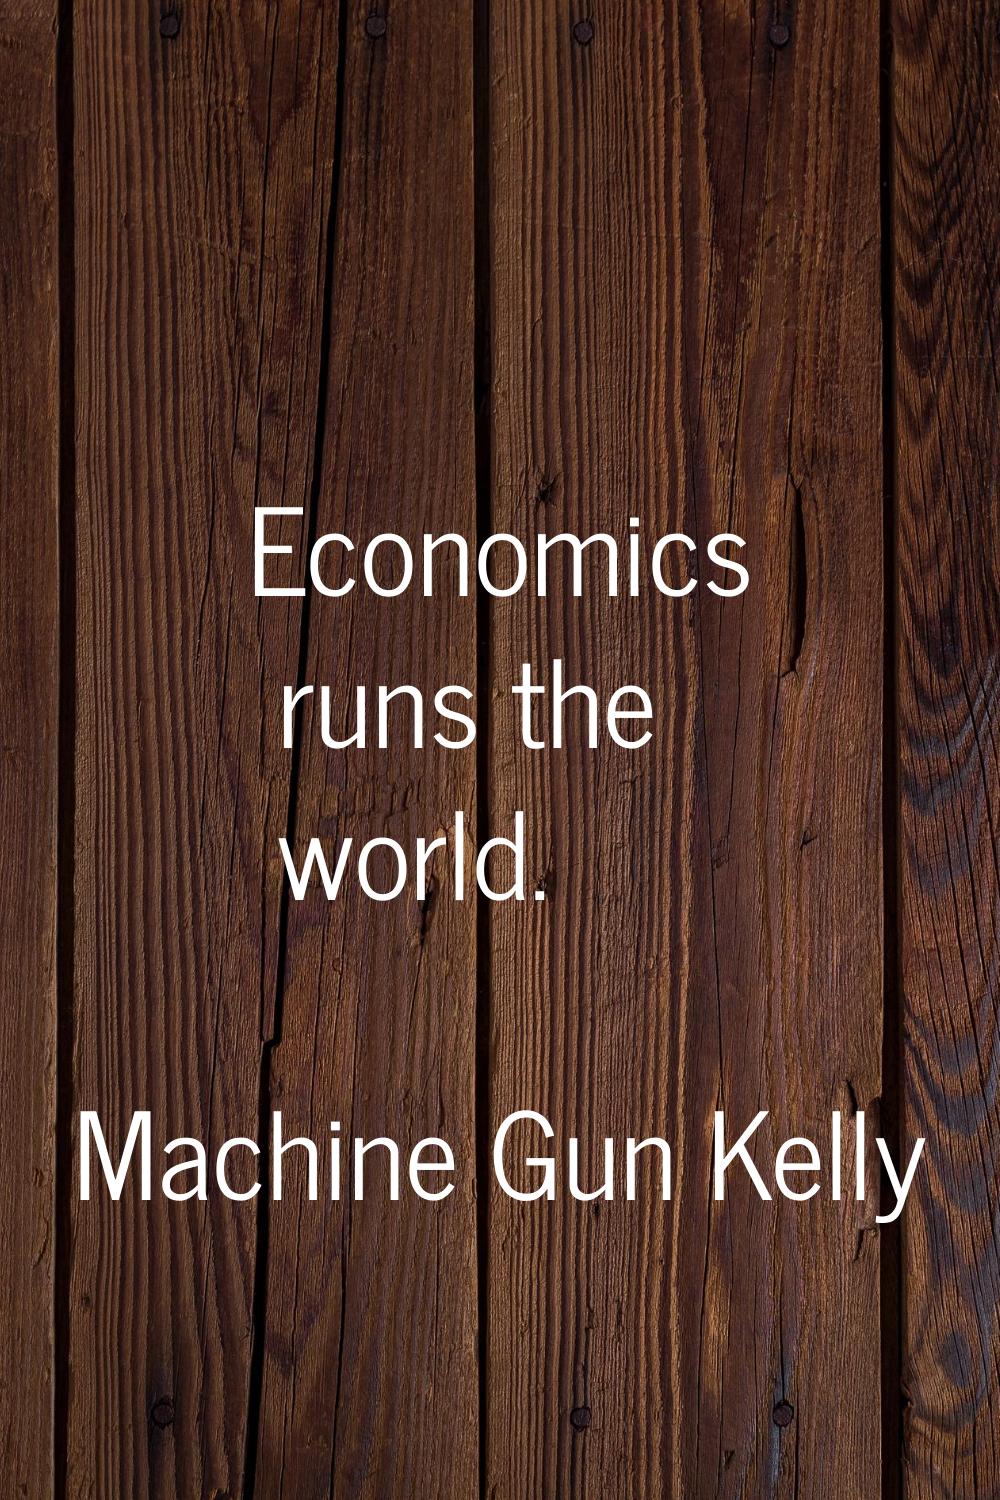 Economics runs the world.